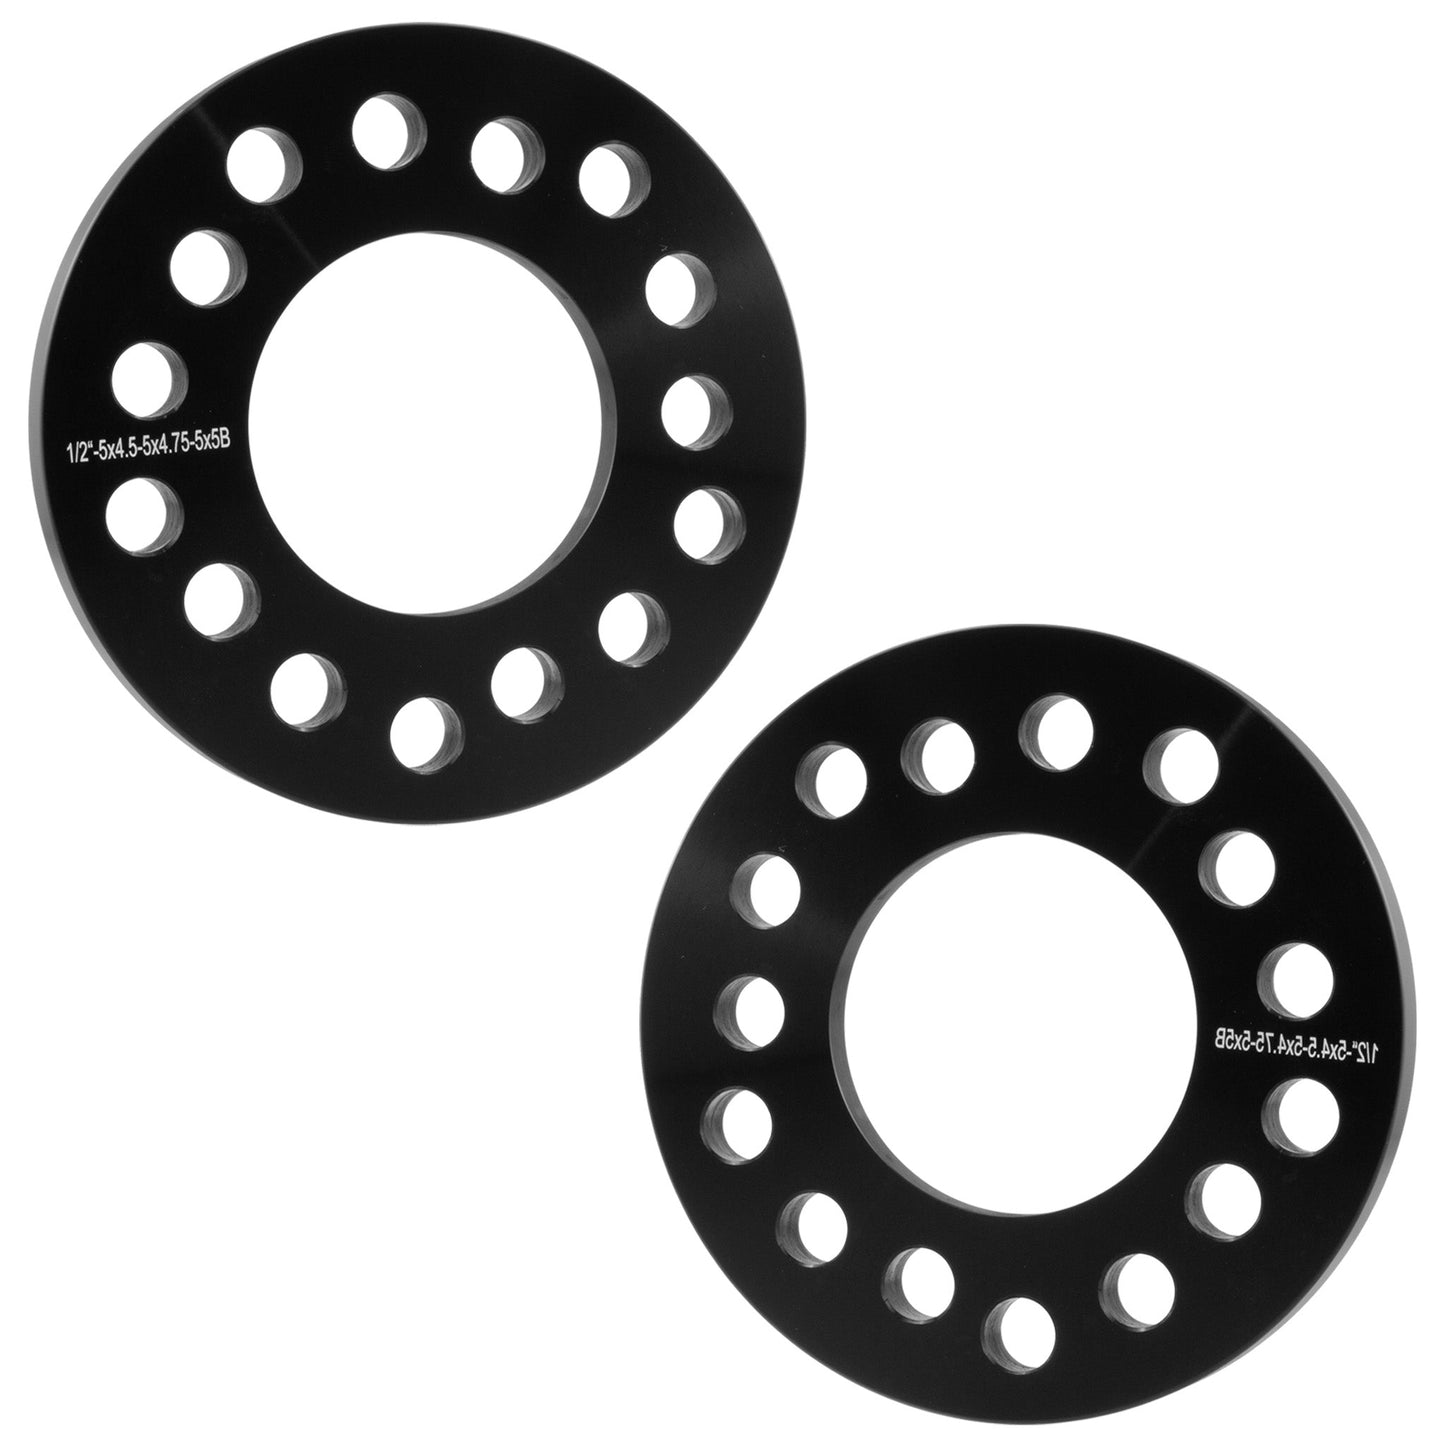 1/4" Titan Wheel Spacers for Wrangler TJ YJ XJ KJ | 5x4.5 Universal 5x4.5, 5x4.75 & 5x5 | Titan Wheel Accessories